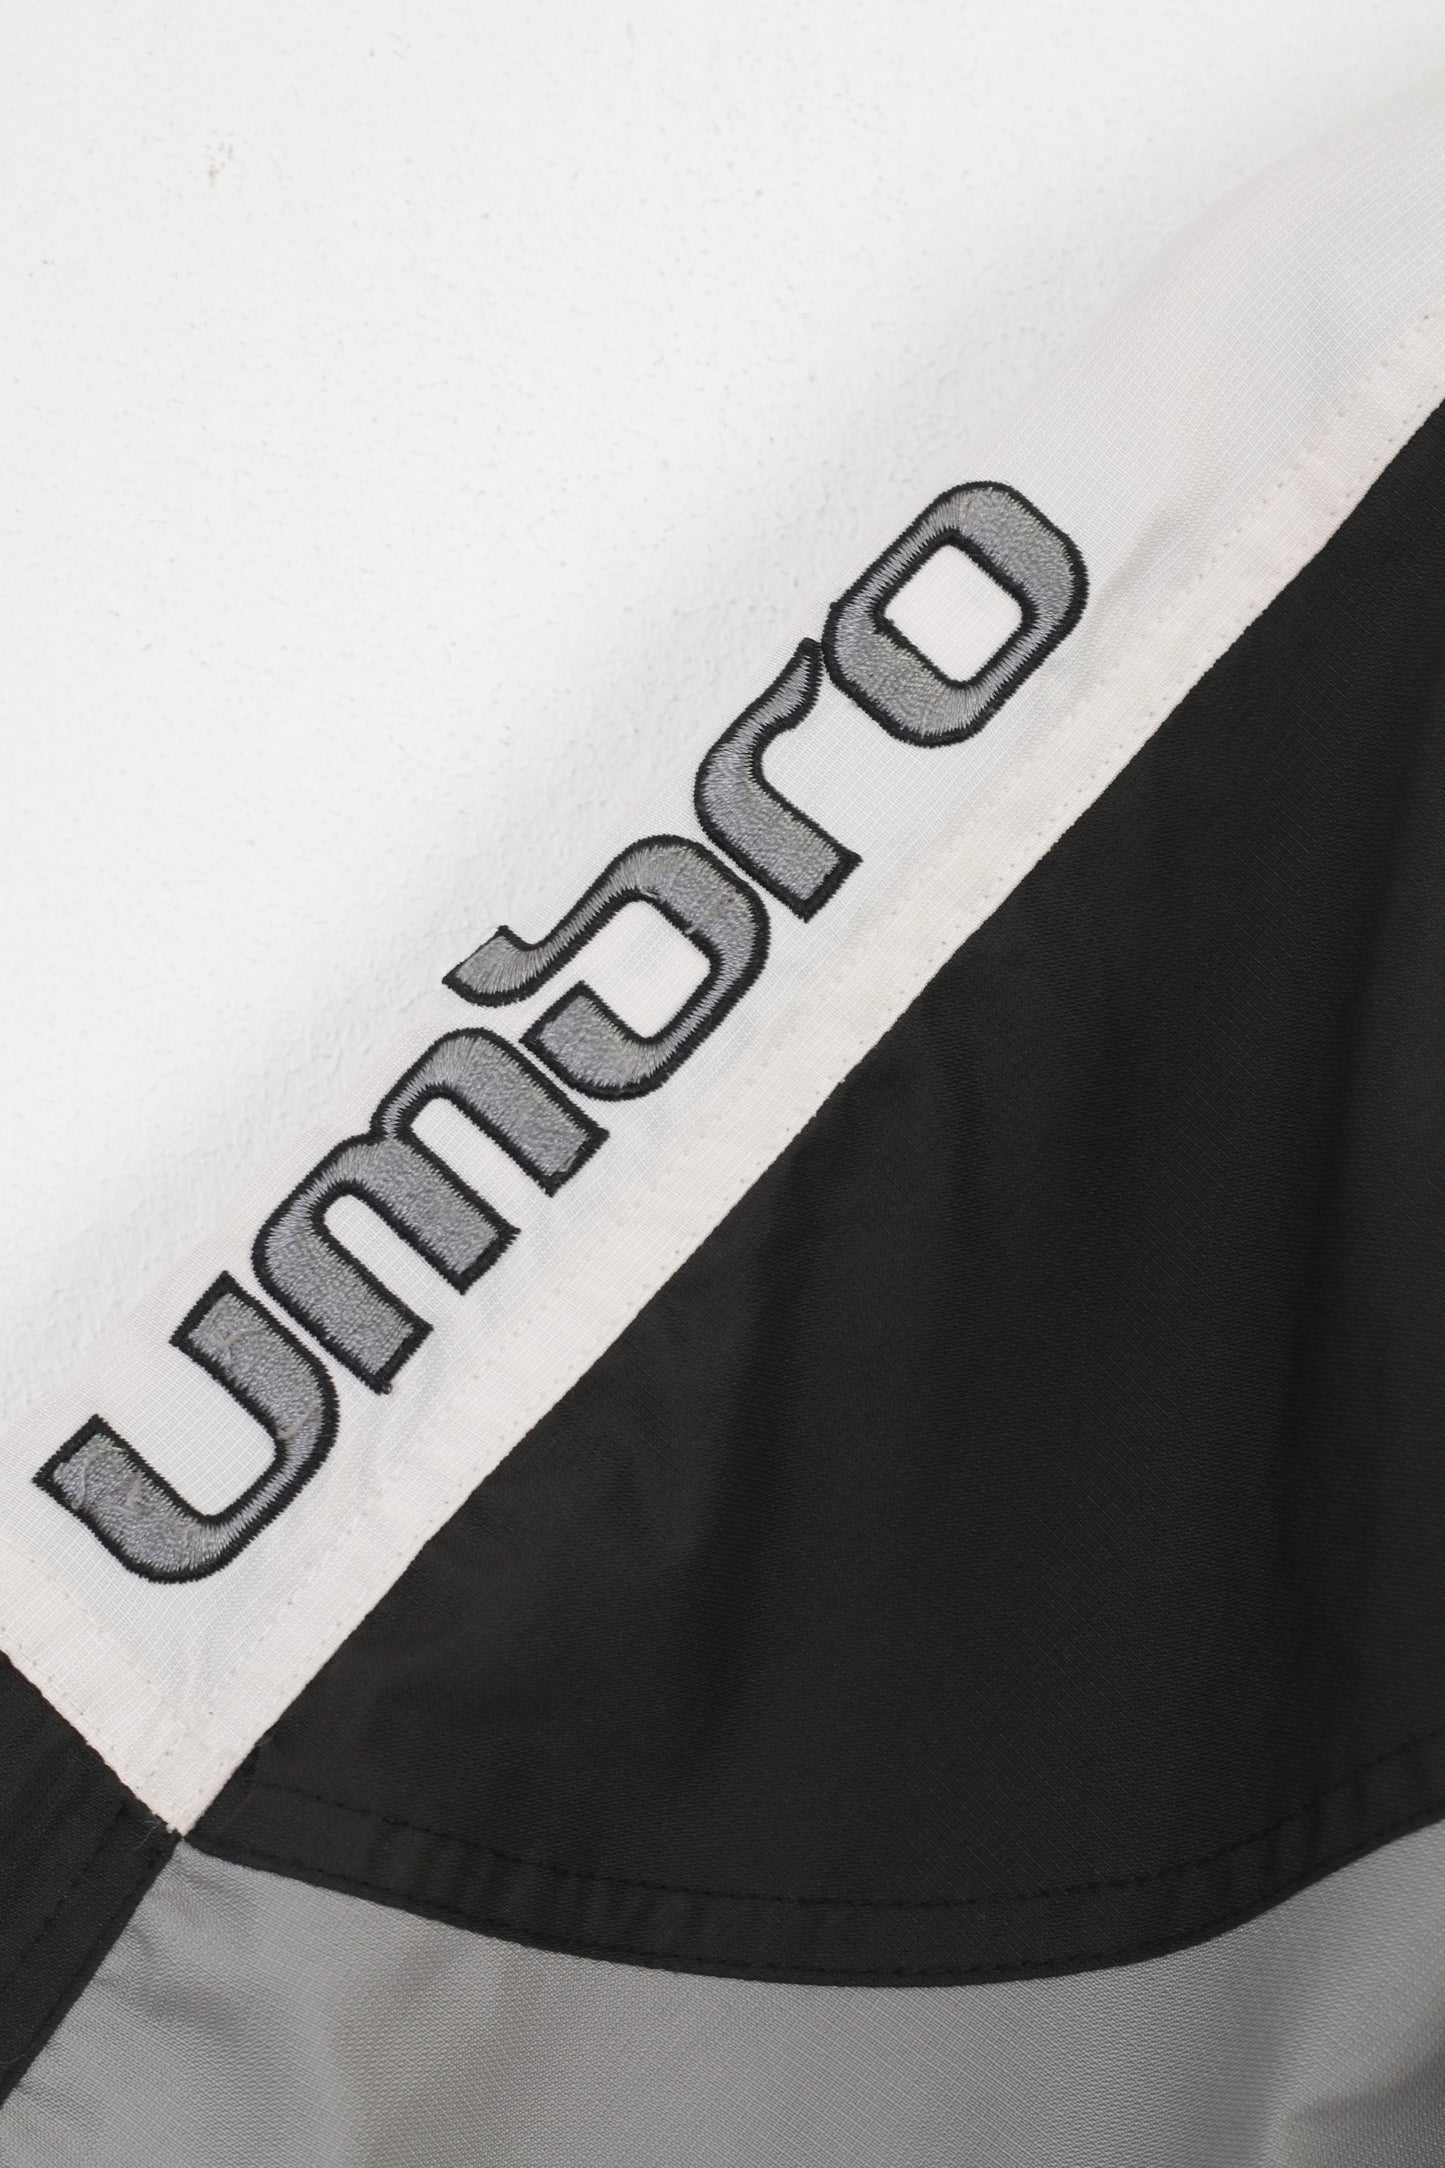 Umbro Boys 140 Jacket Full Zipper Sport Black Grey Outwear Vintage Top